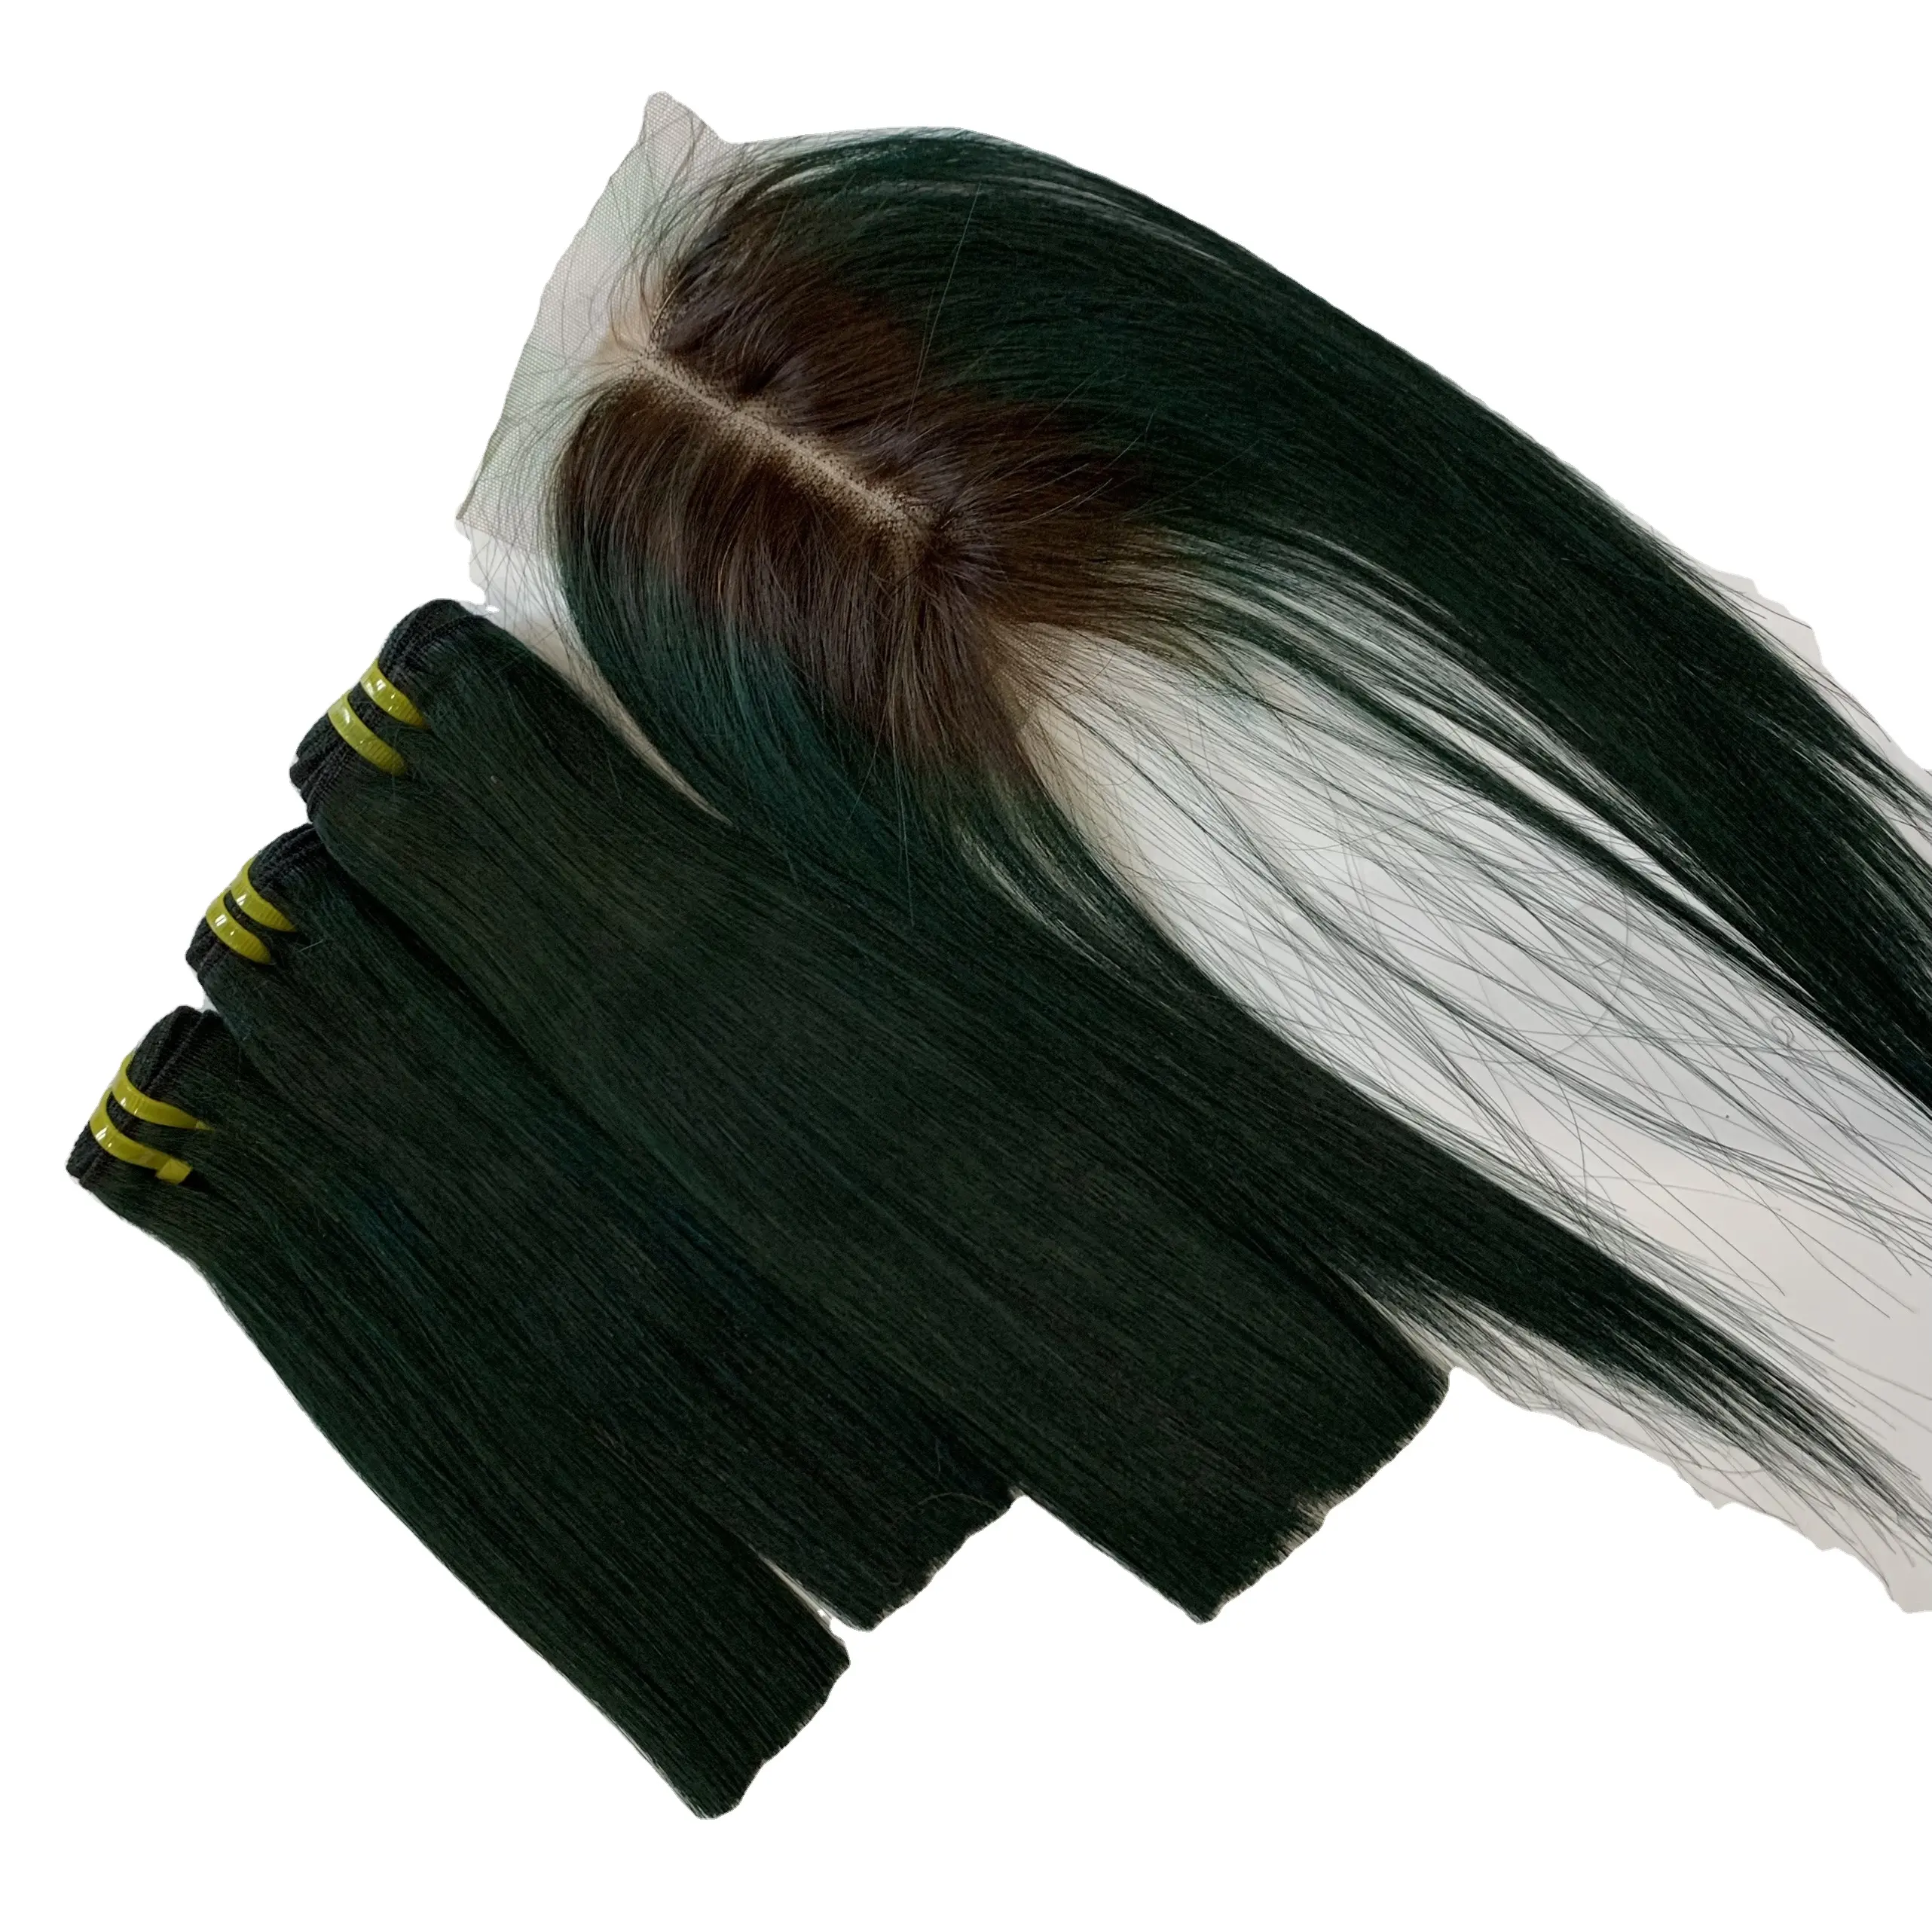 Bone straight Vietnam hair human hair wigs raw Indian hair virgin ali express Green color cuticle aligned extensions